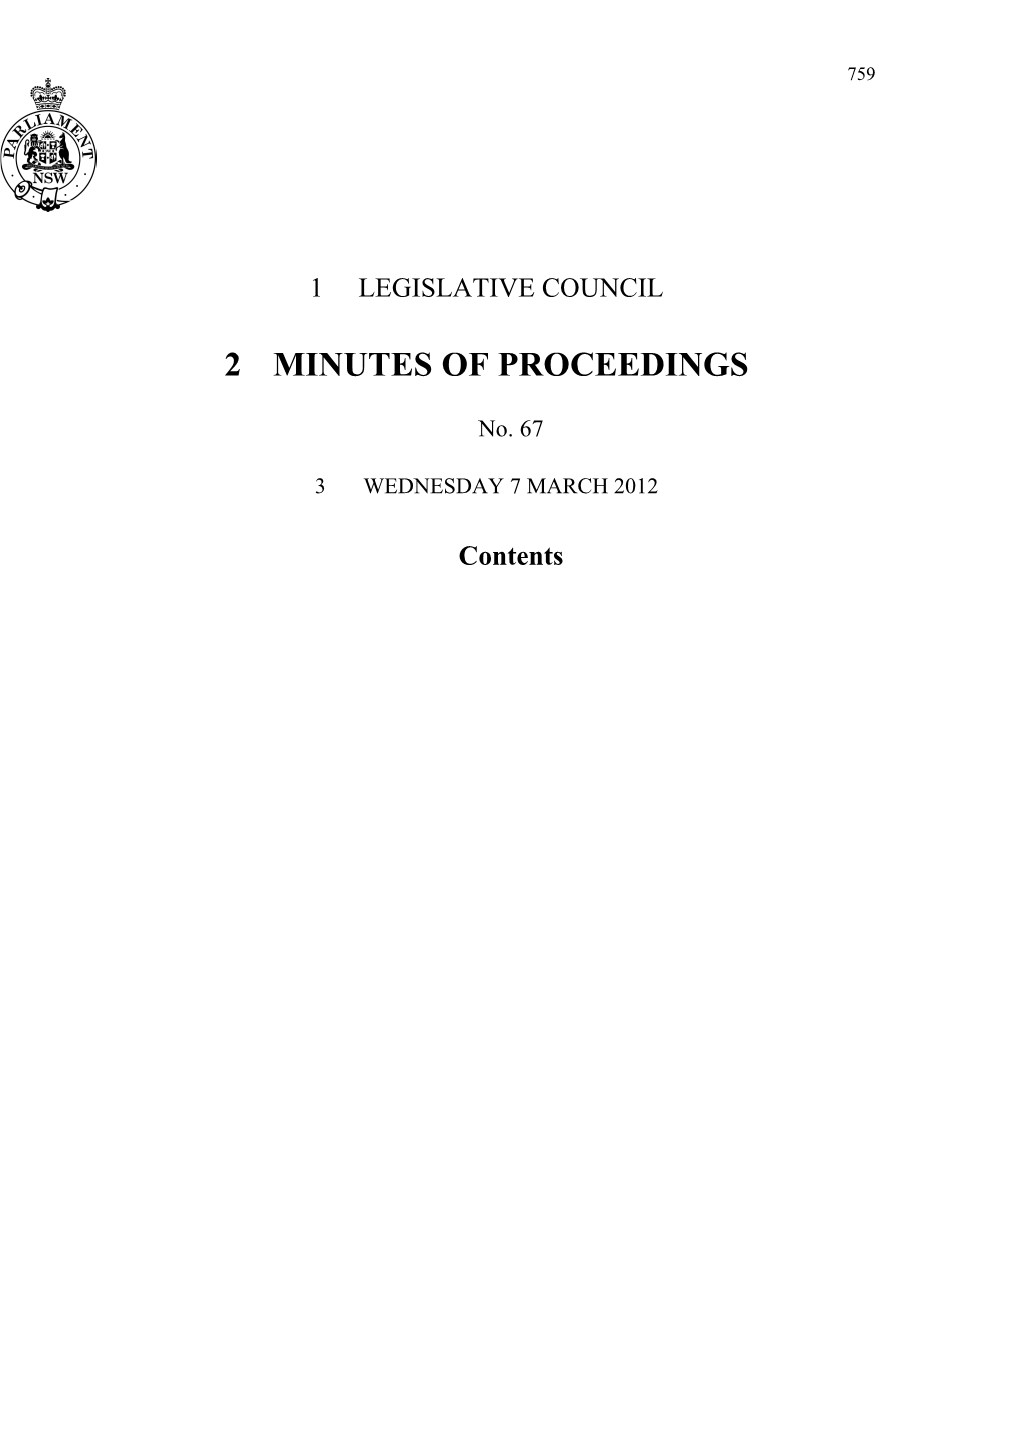 Legislative Council Minutes No. 67 Wednesday 7 March 2012